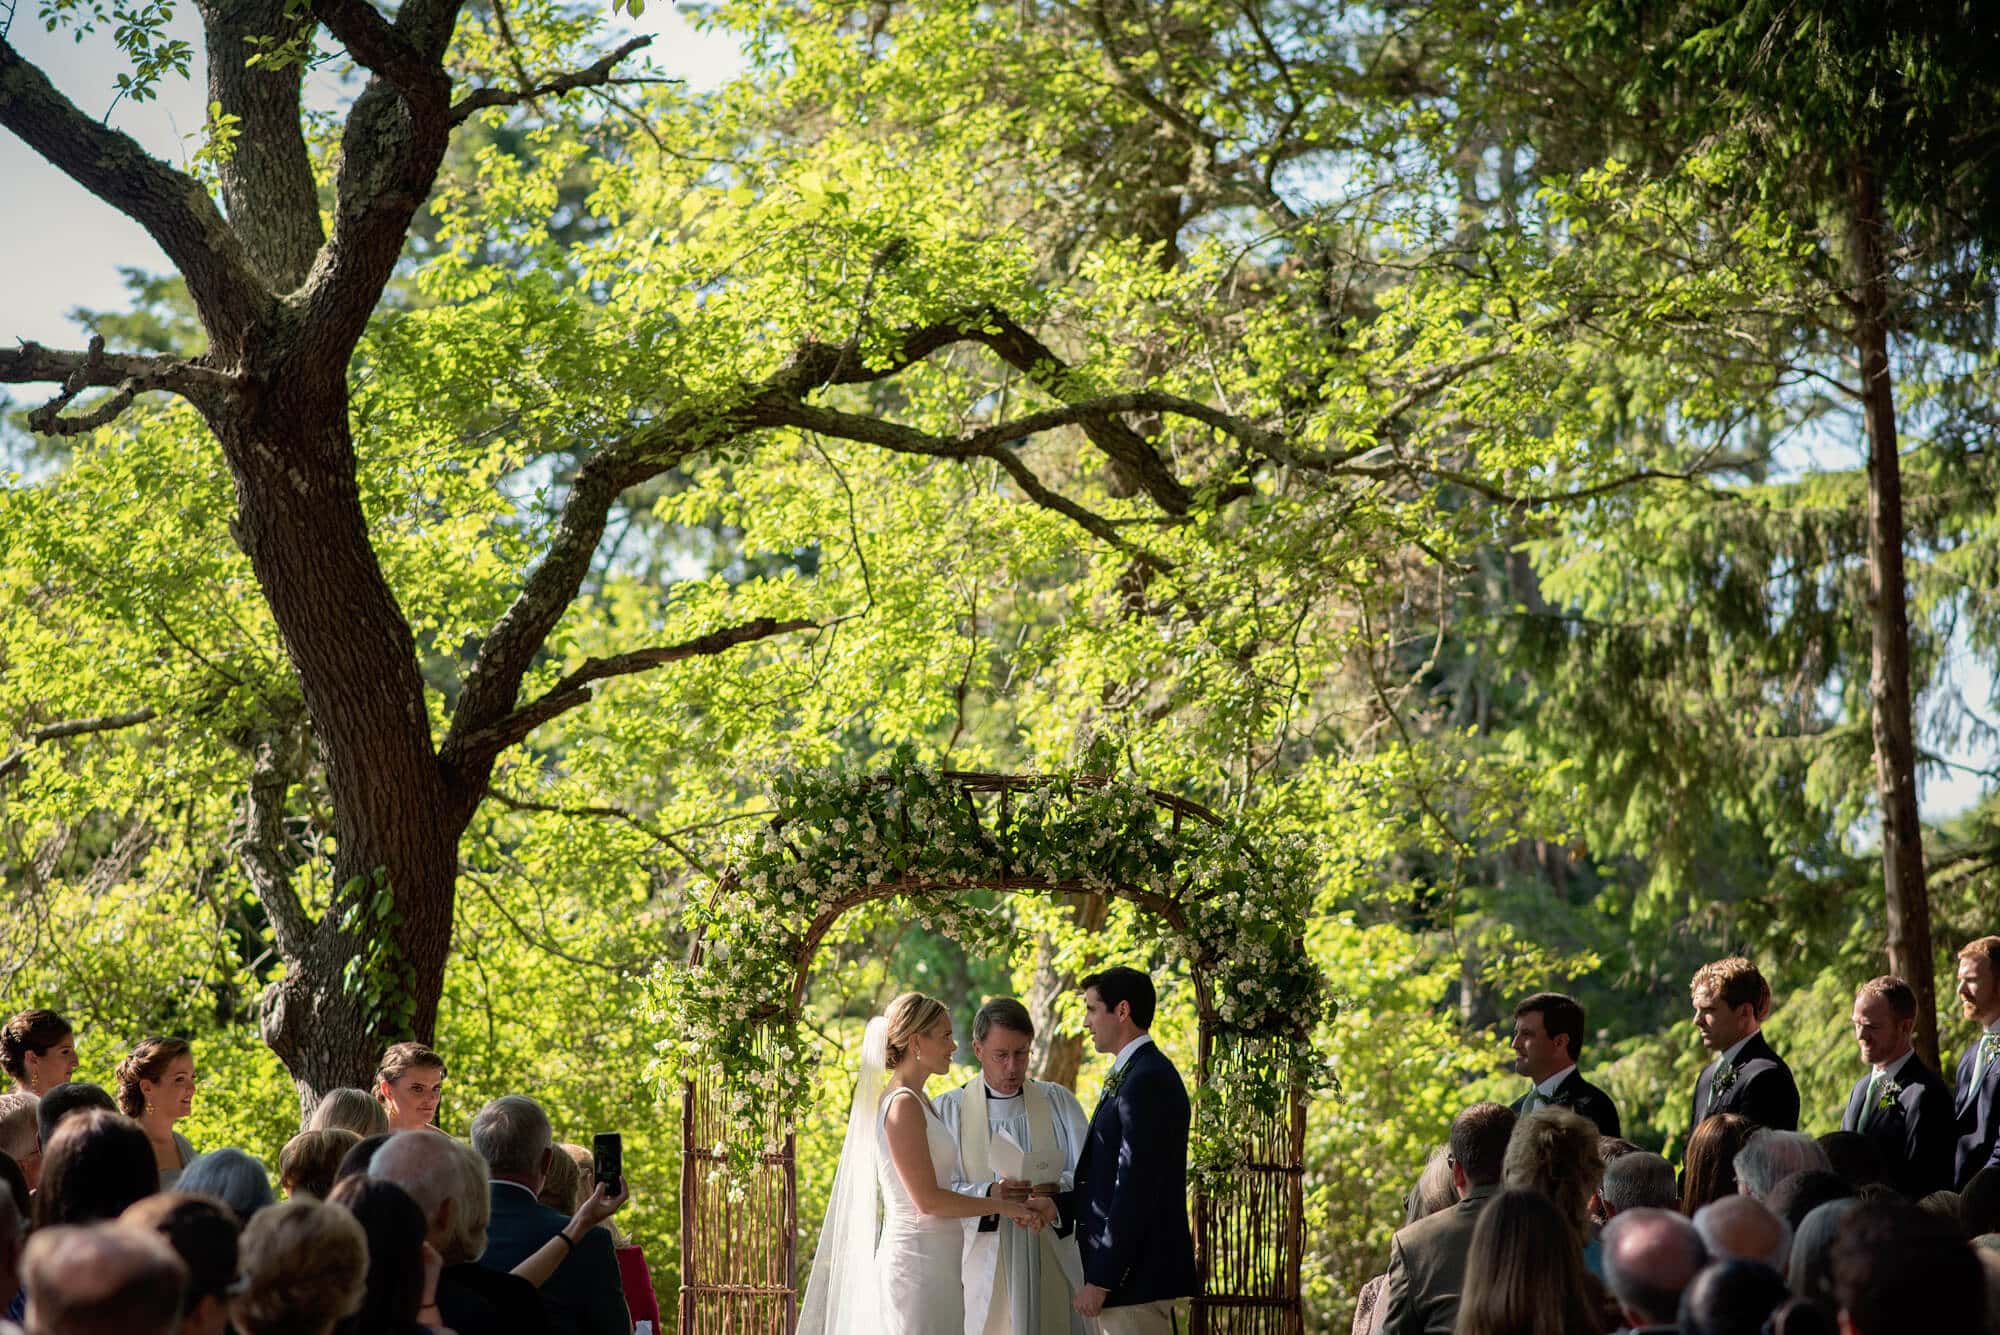 chatham wedding ceremony under trees